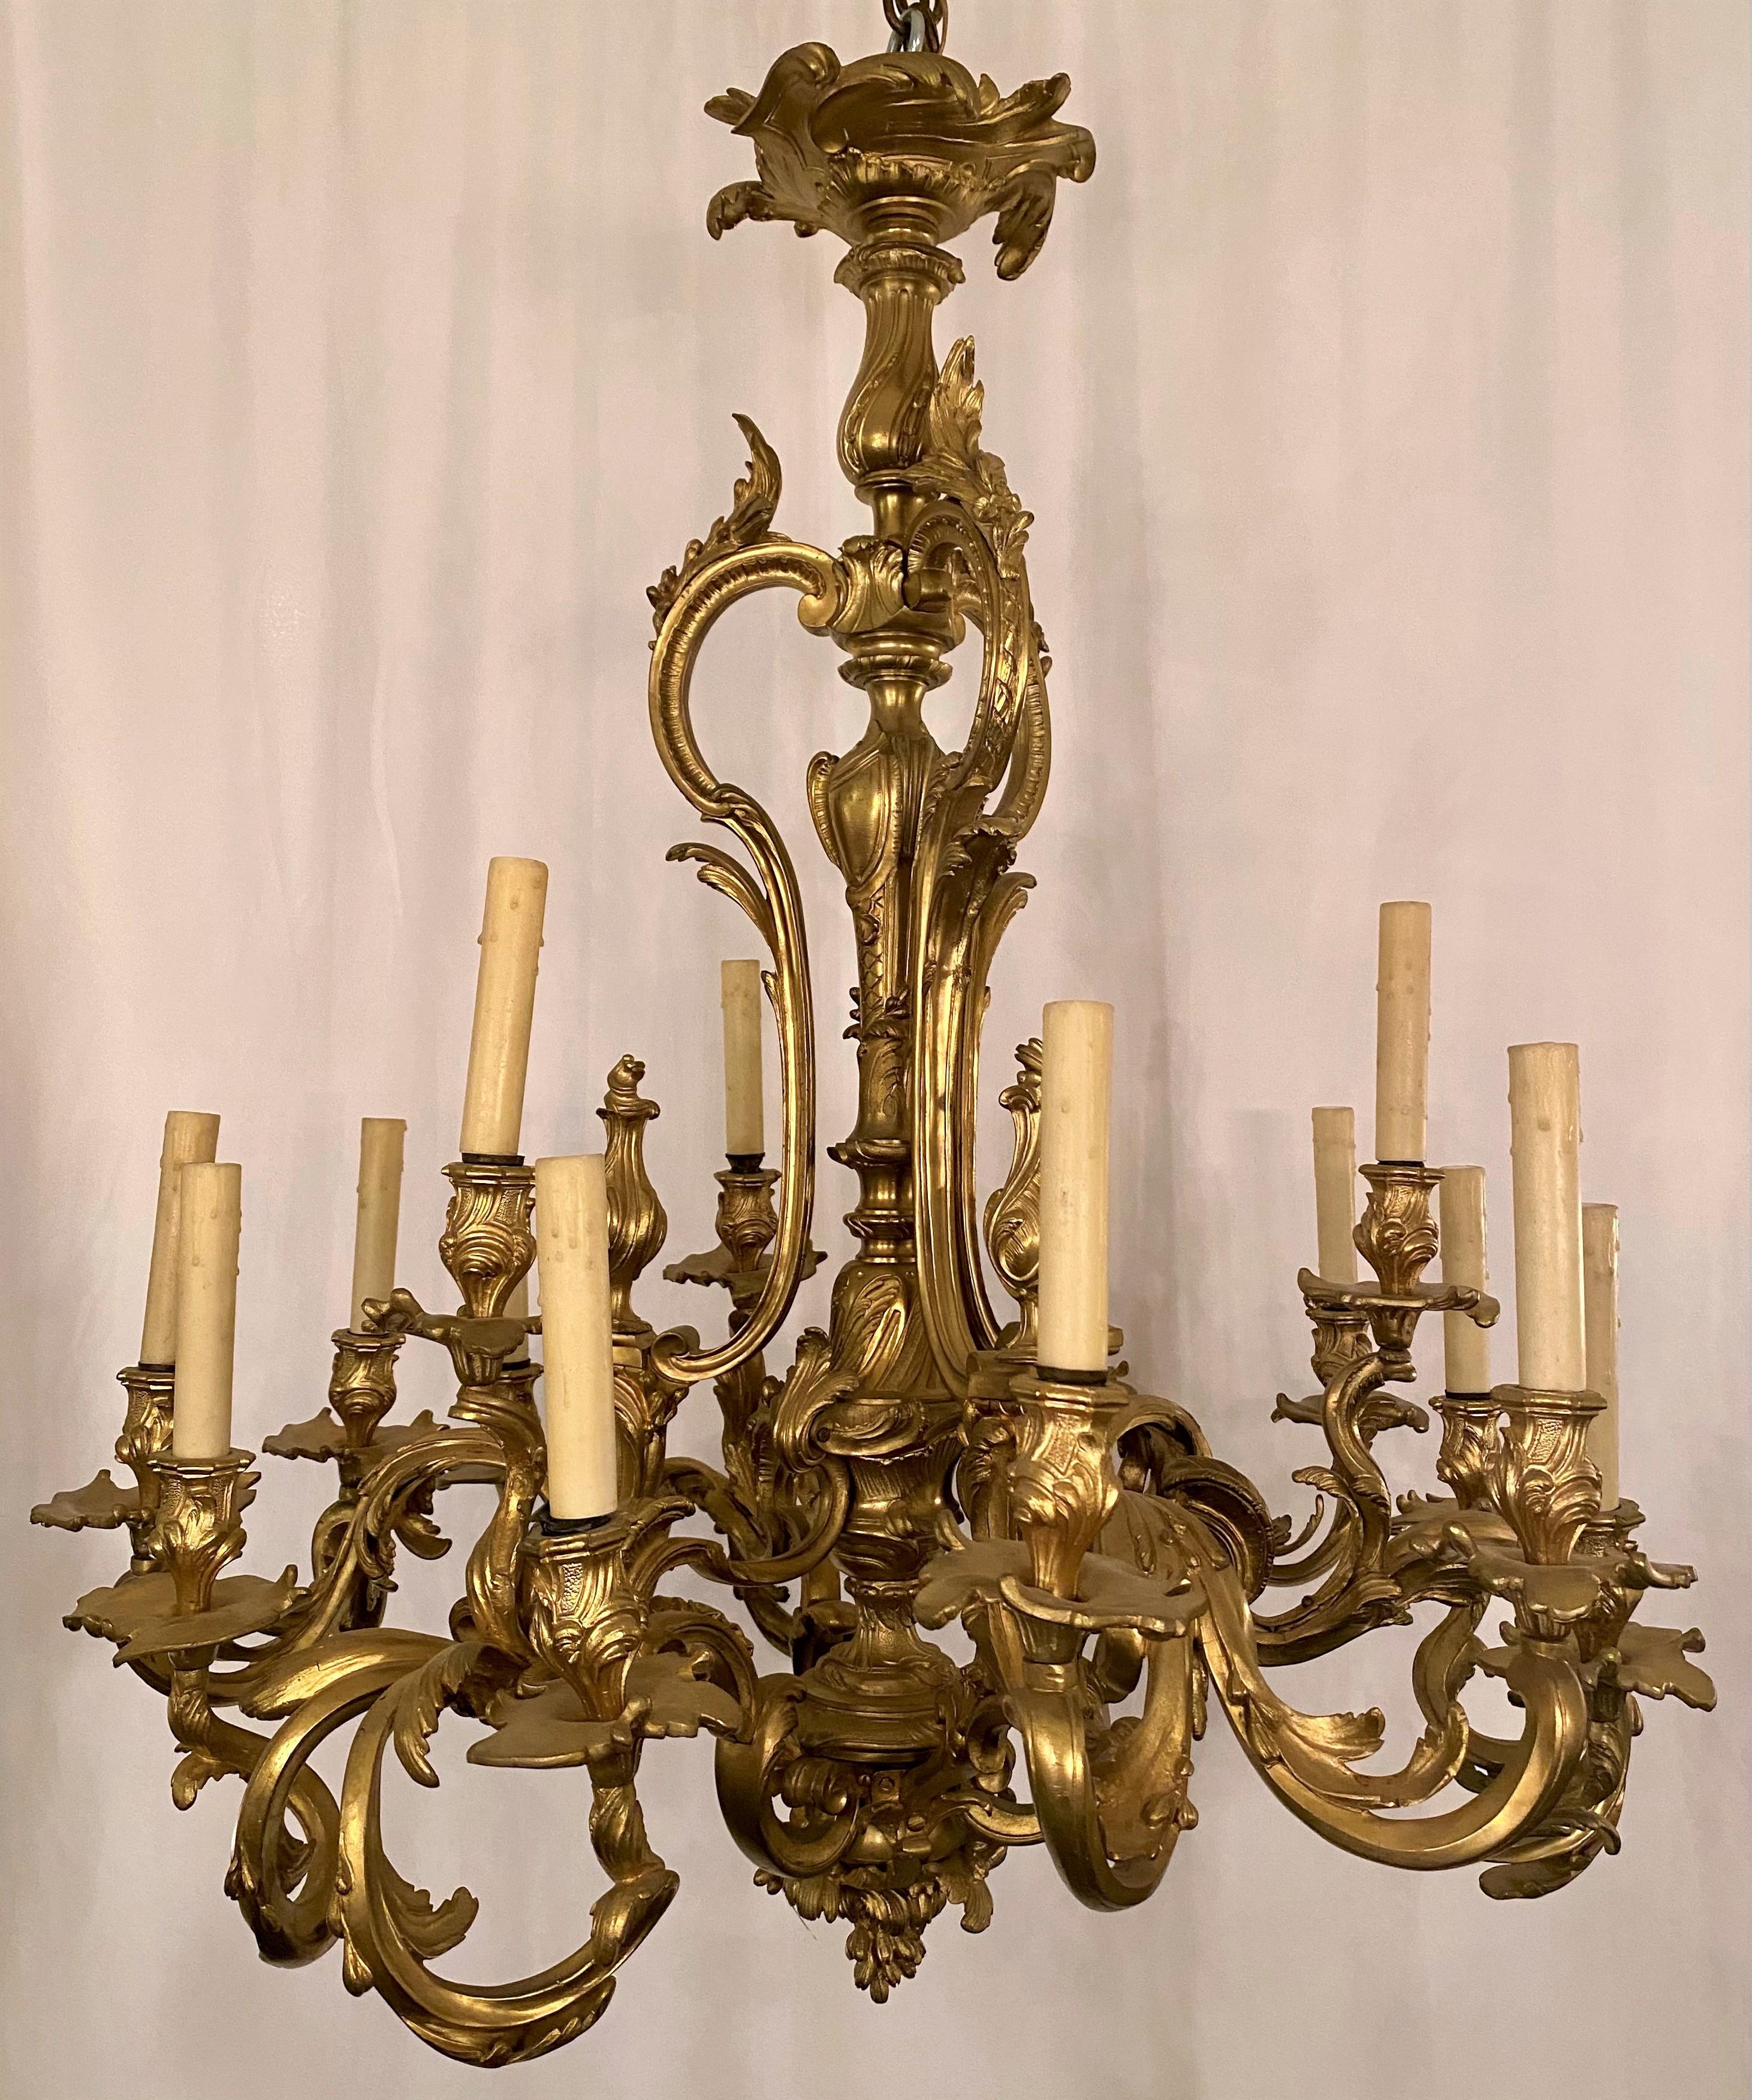 Antique French superb quality Louis XV style Napoleon III era gold bronze 15 light chandelier, circa 1880.
CHB238.